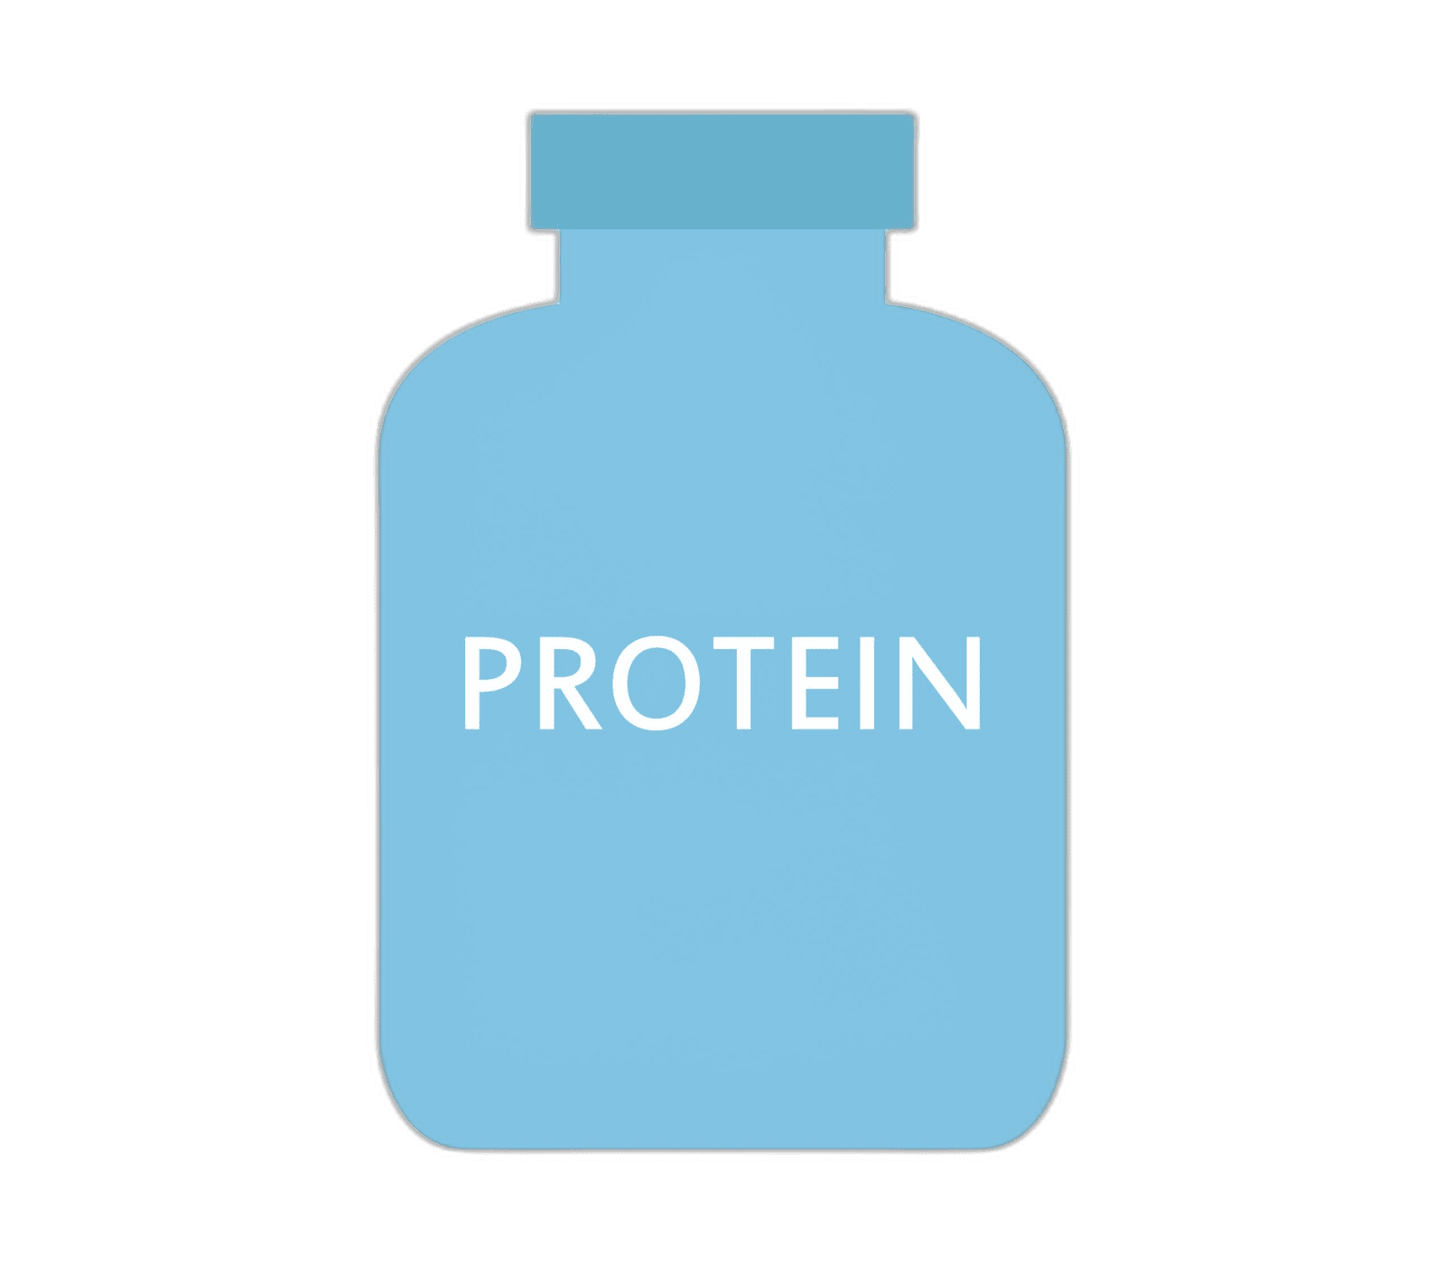 Serum Protein Test - healthcare nt sickcare